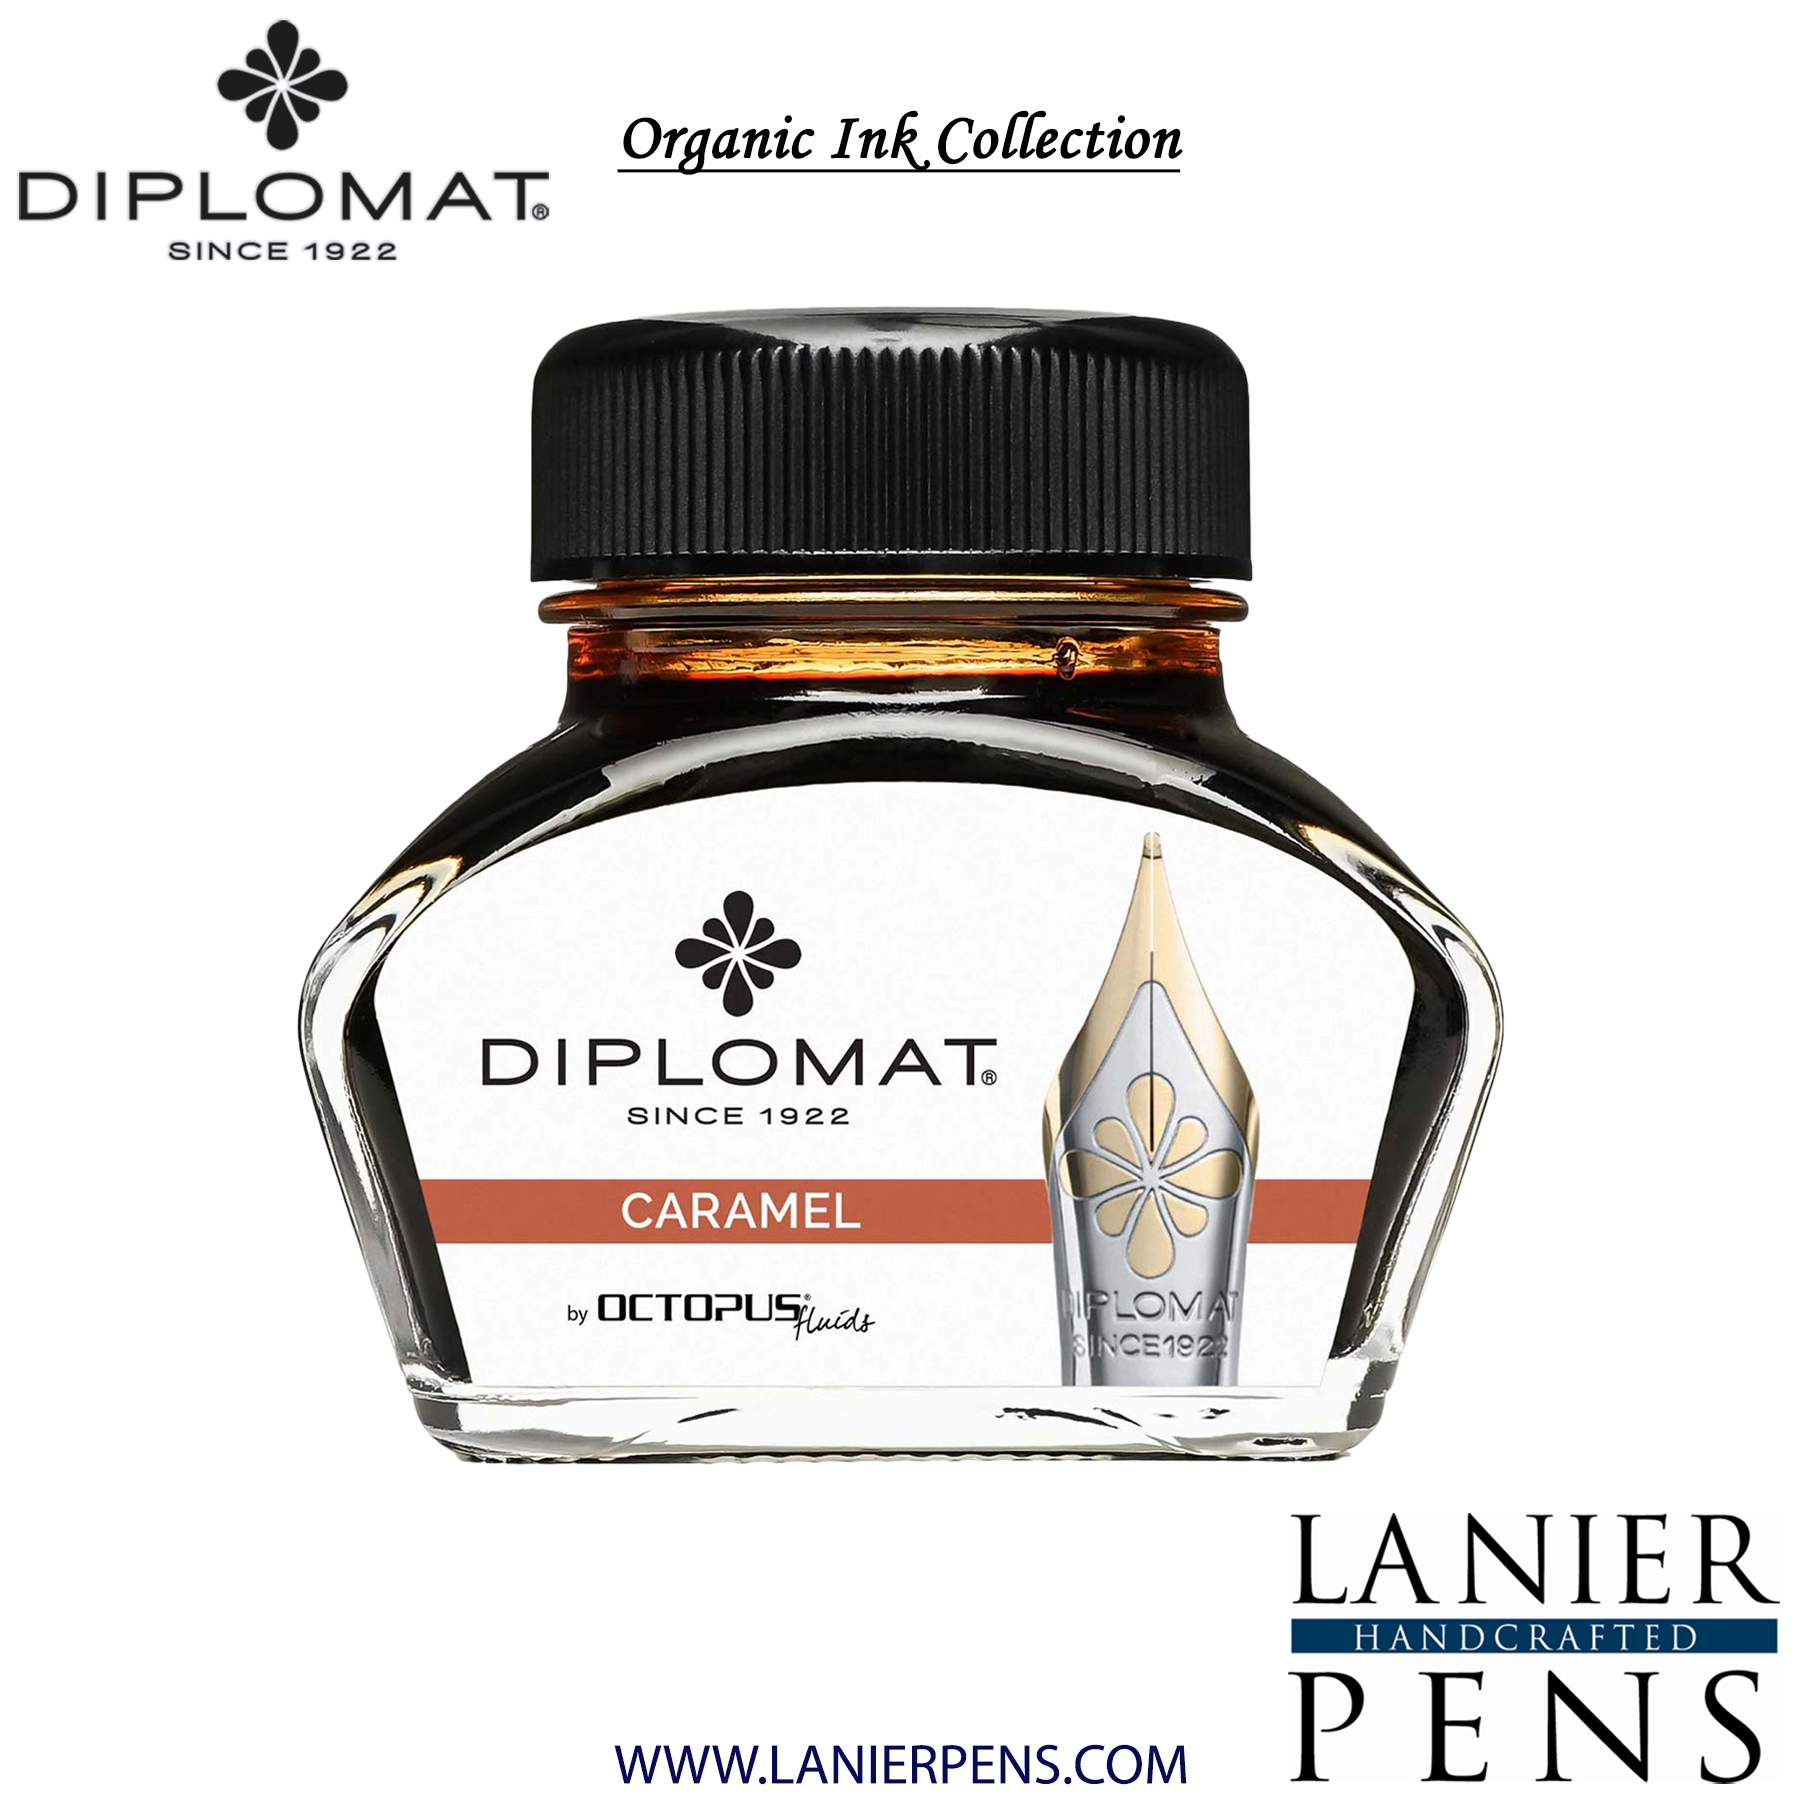 Diplomat Caramel Ink Bottle, 30ml by Lanier Pens, lanierpens, lanierpens.com, wndpens, WOOD N DREAMS, Pensbylanier